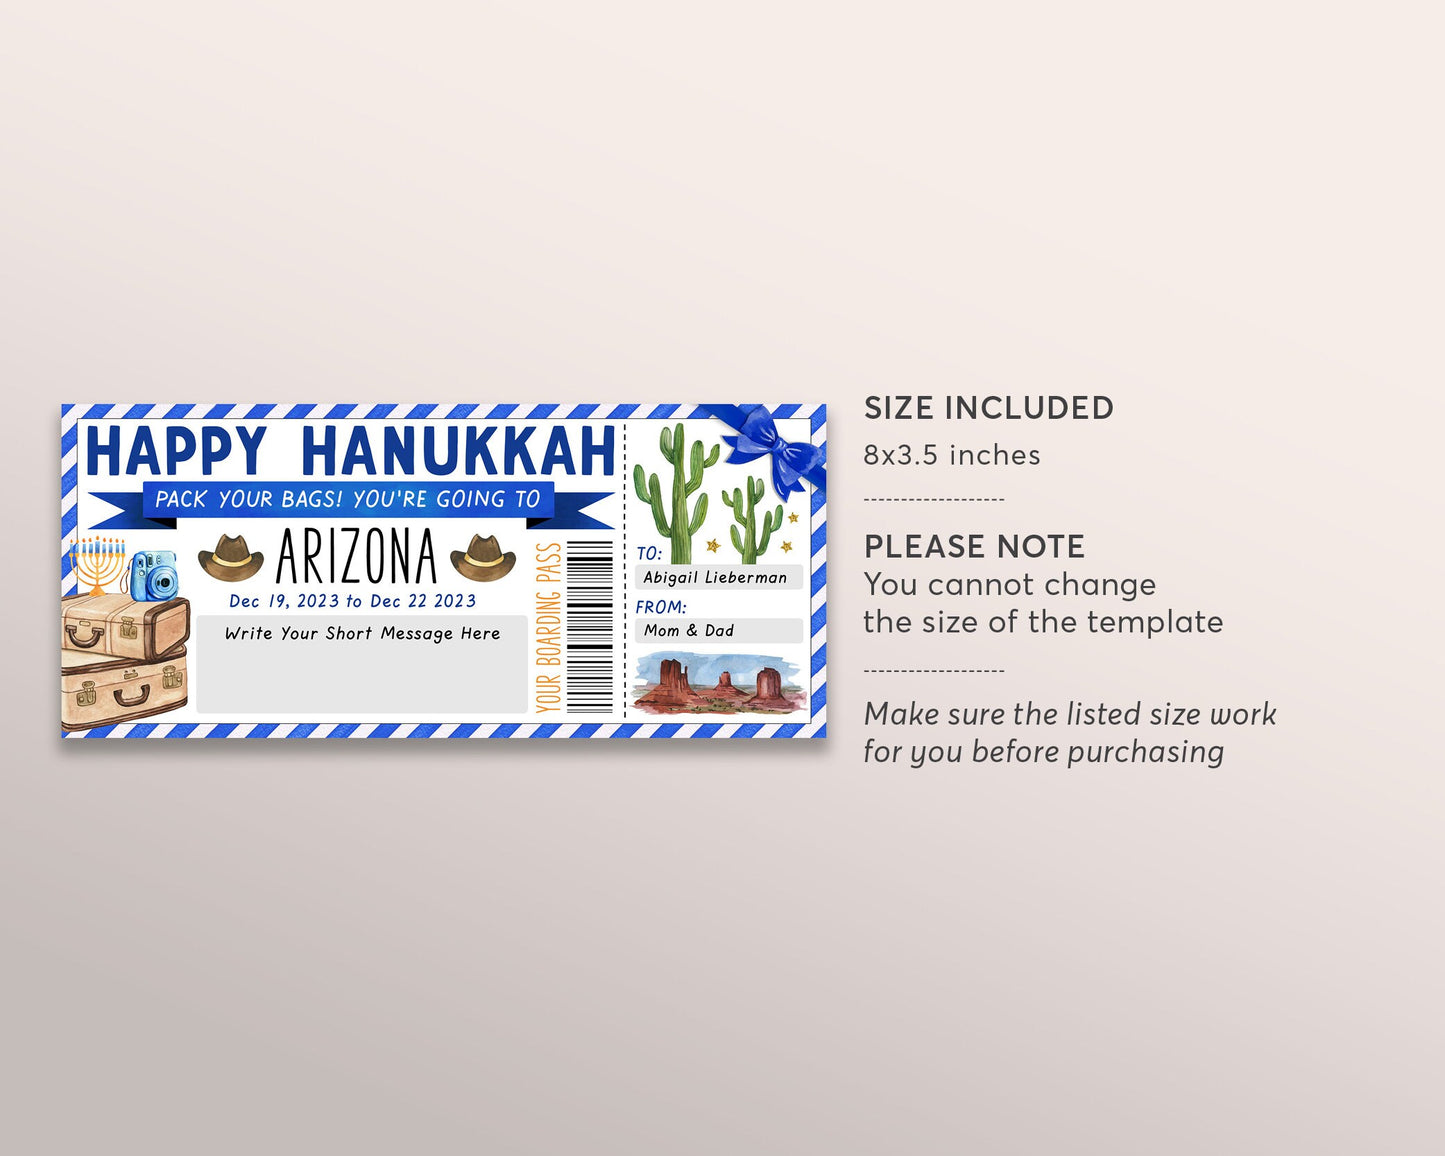 Hanukkah Arizona Trip Ticket Boarding Pass Editable Template, Surprise Chanukah Travel Airline Gift Certificate Trip Reveal, Pack Your Bags